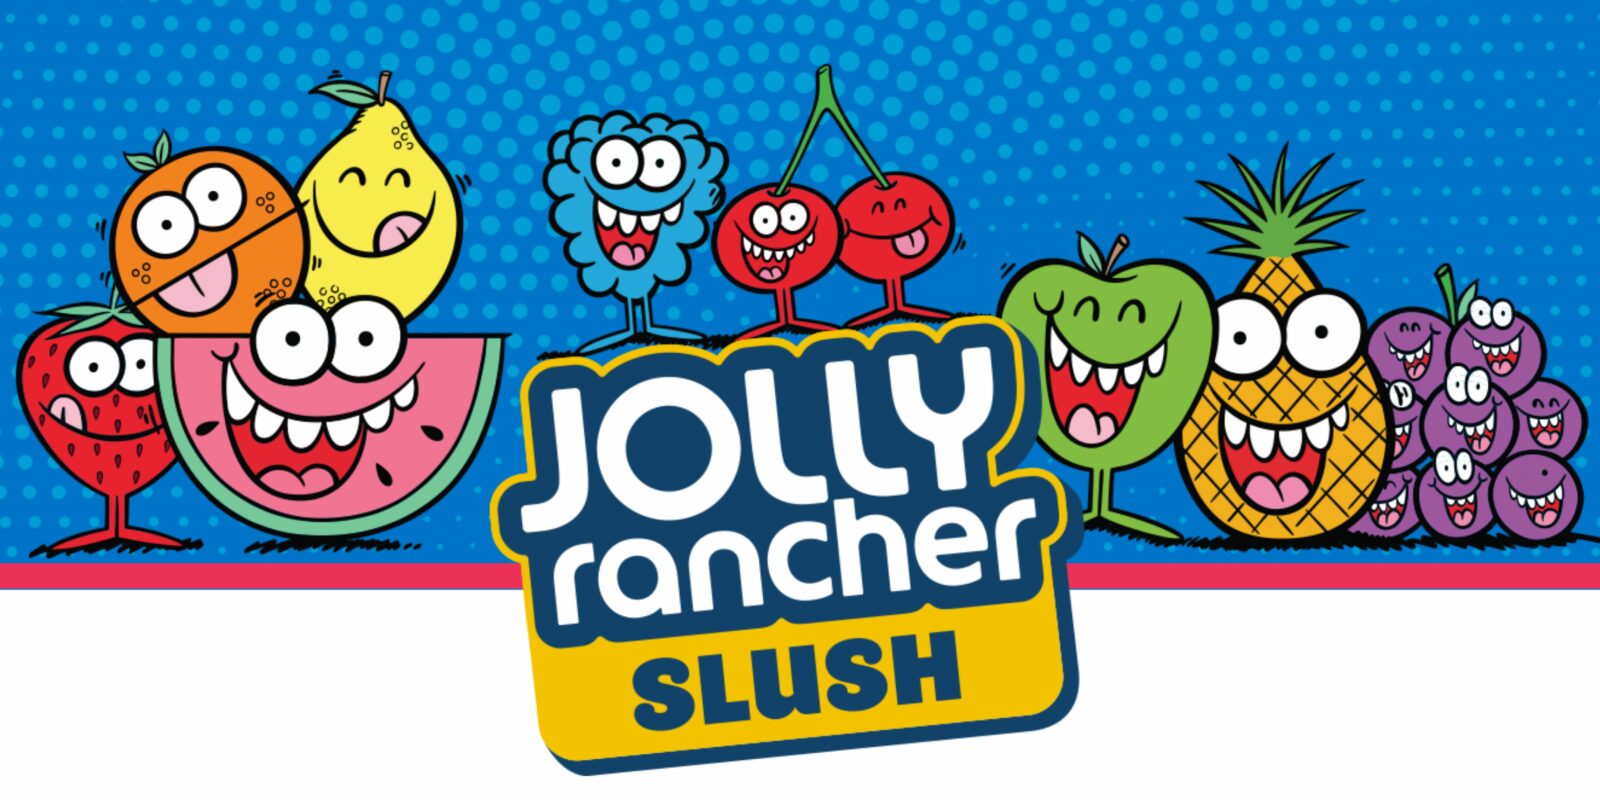 Jolly Rancher Misfits Gummies mer-bears 182G AMERICAN SNACKS - XMANIA Ireland 7